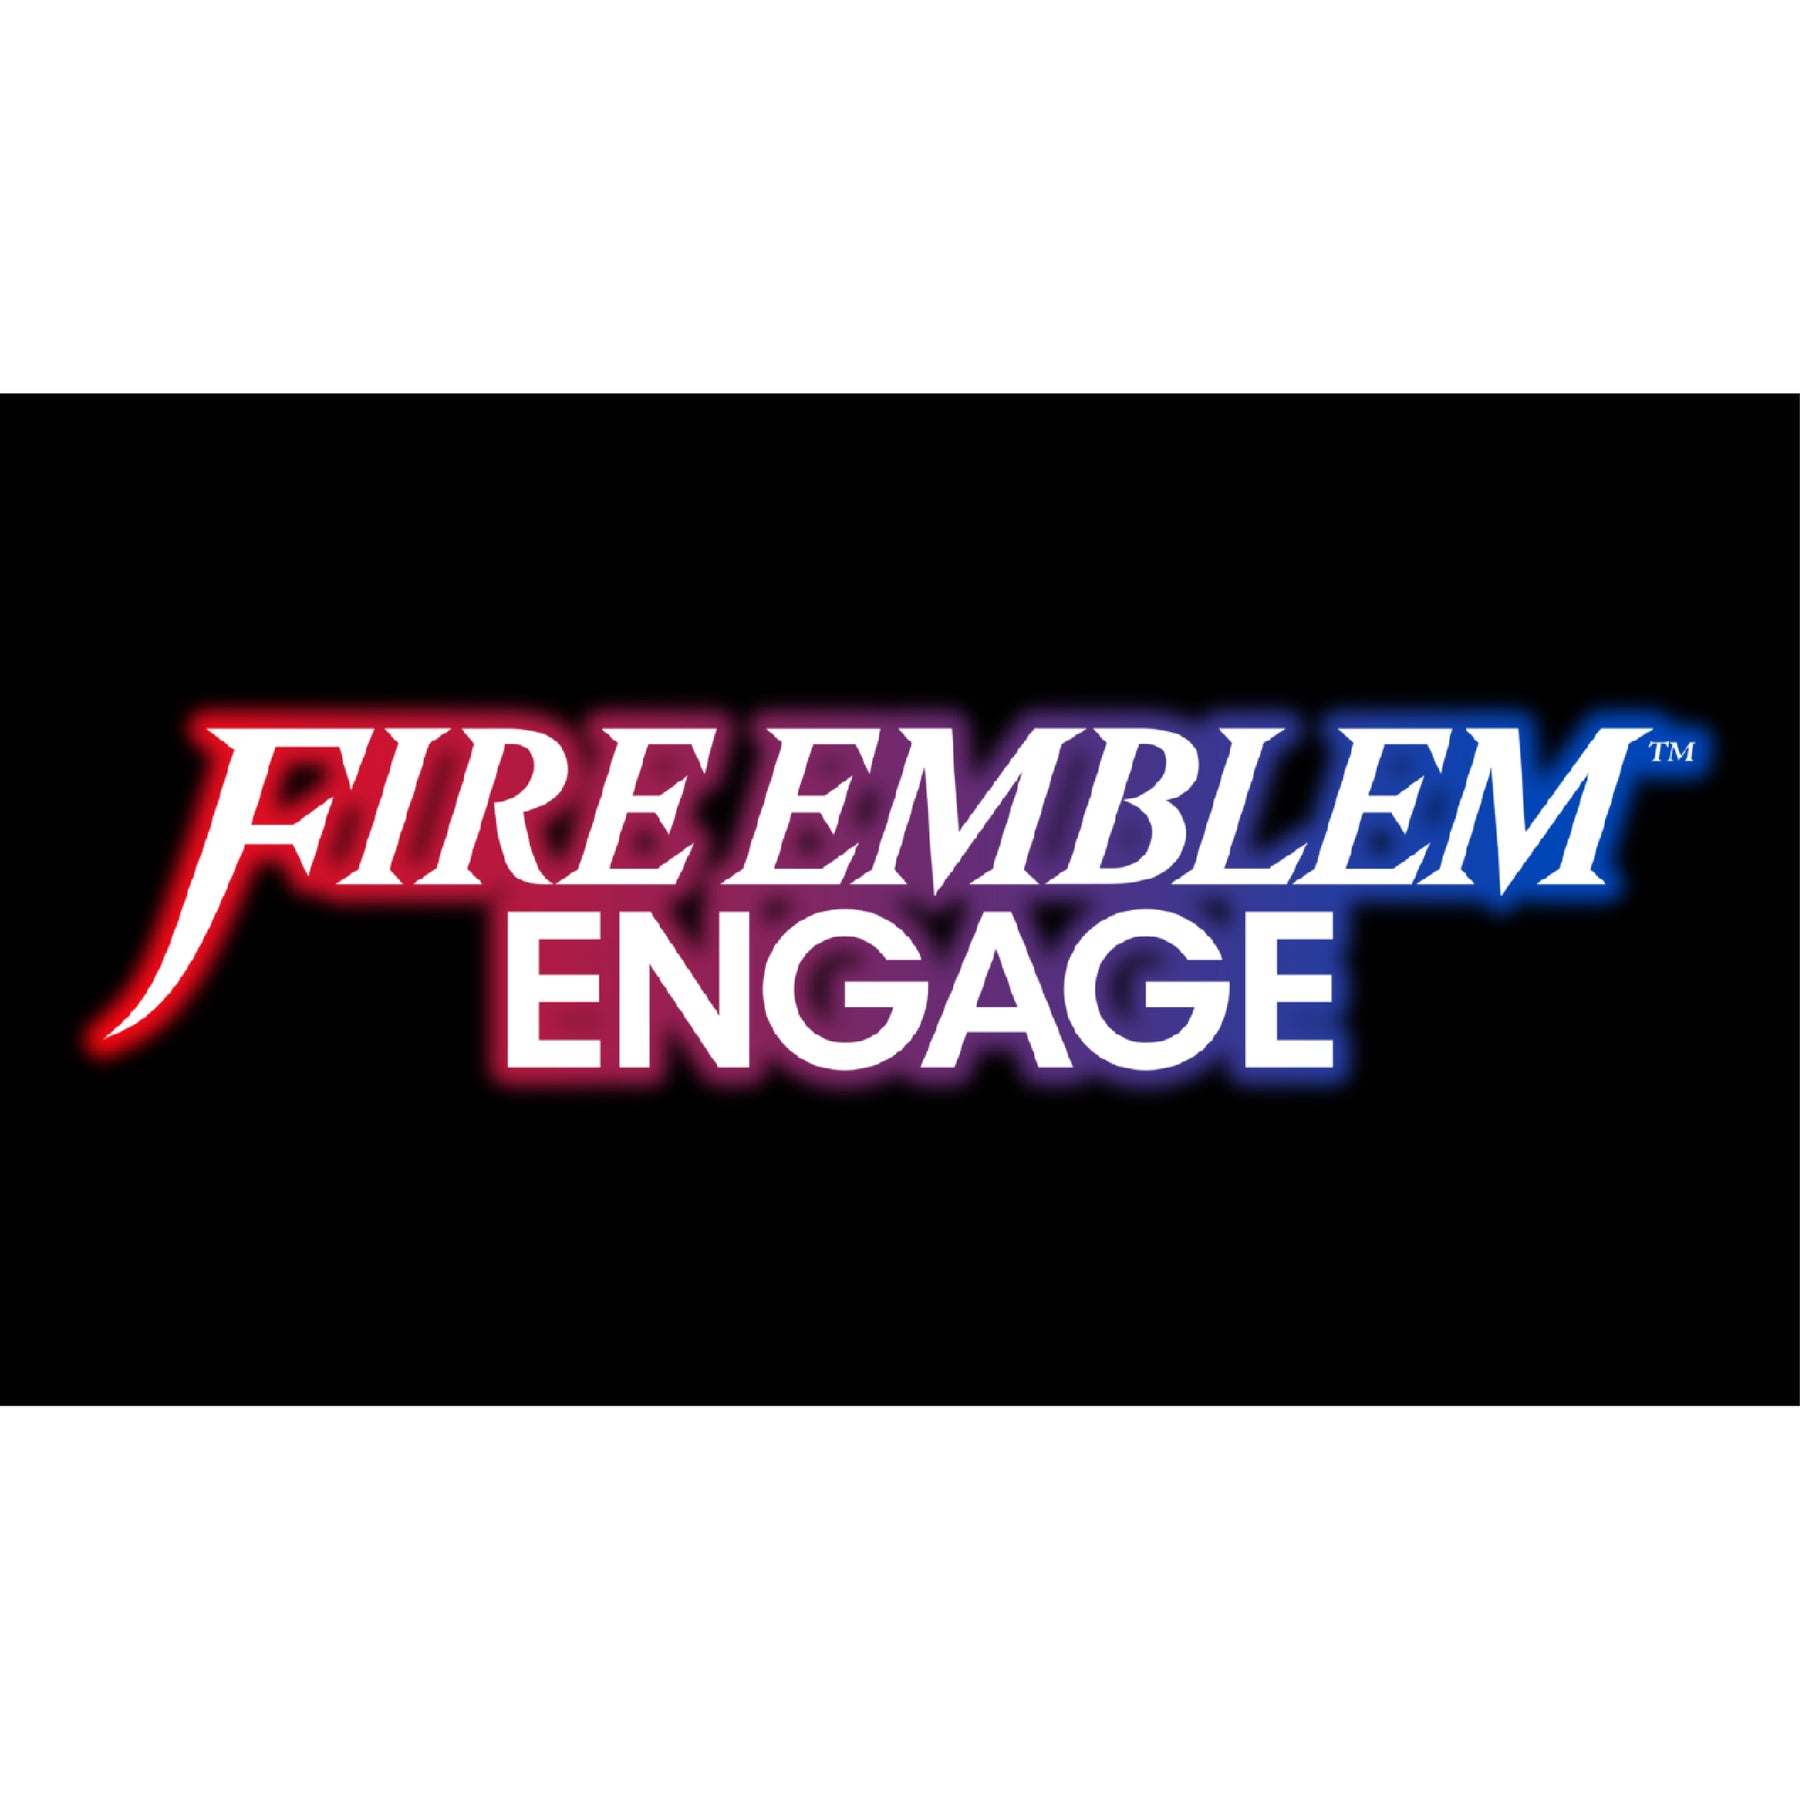 Nintendo Switch Fire Emblem Engage